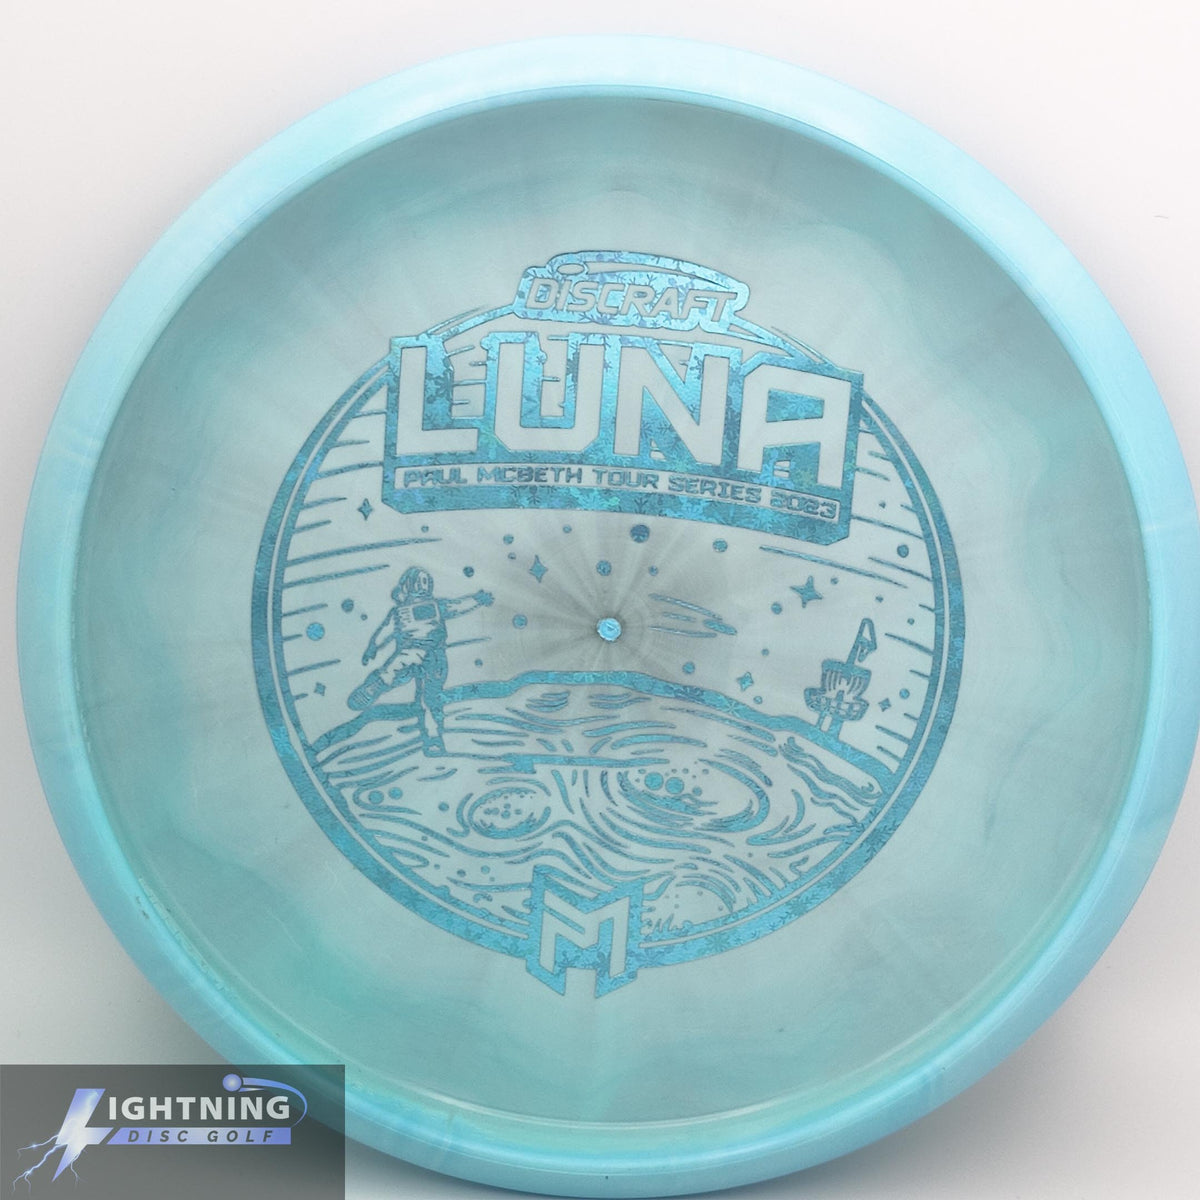 Discraft Luna - Tour Series Paul McBeth 2023